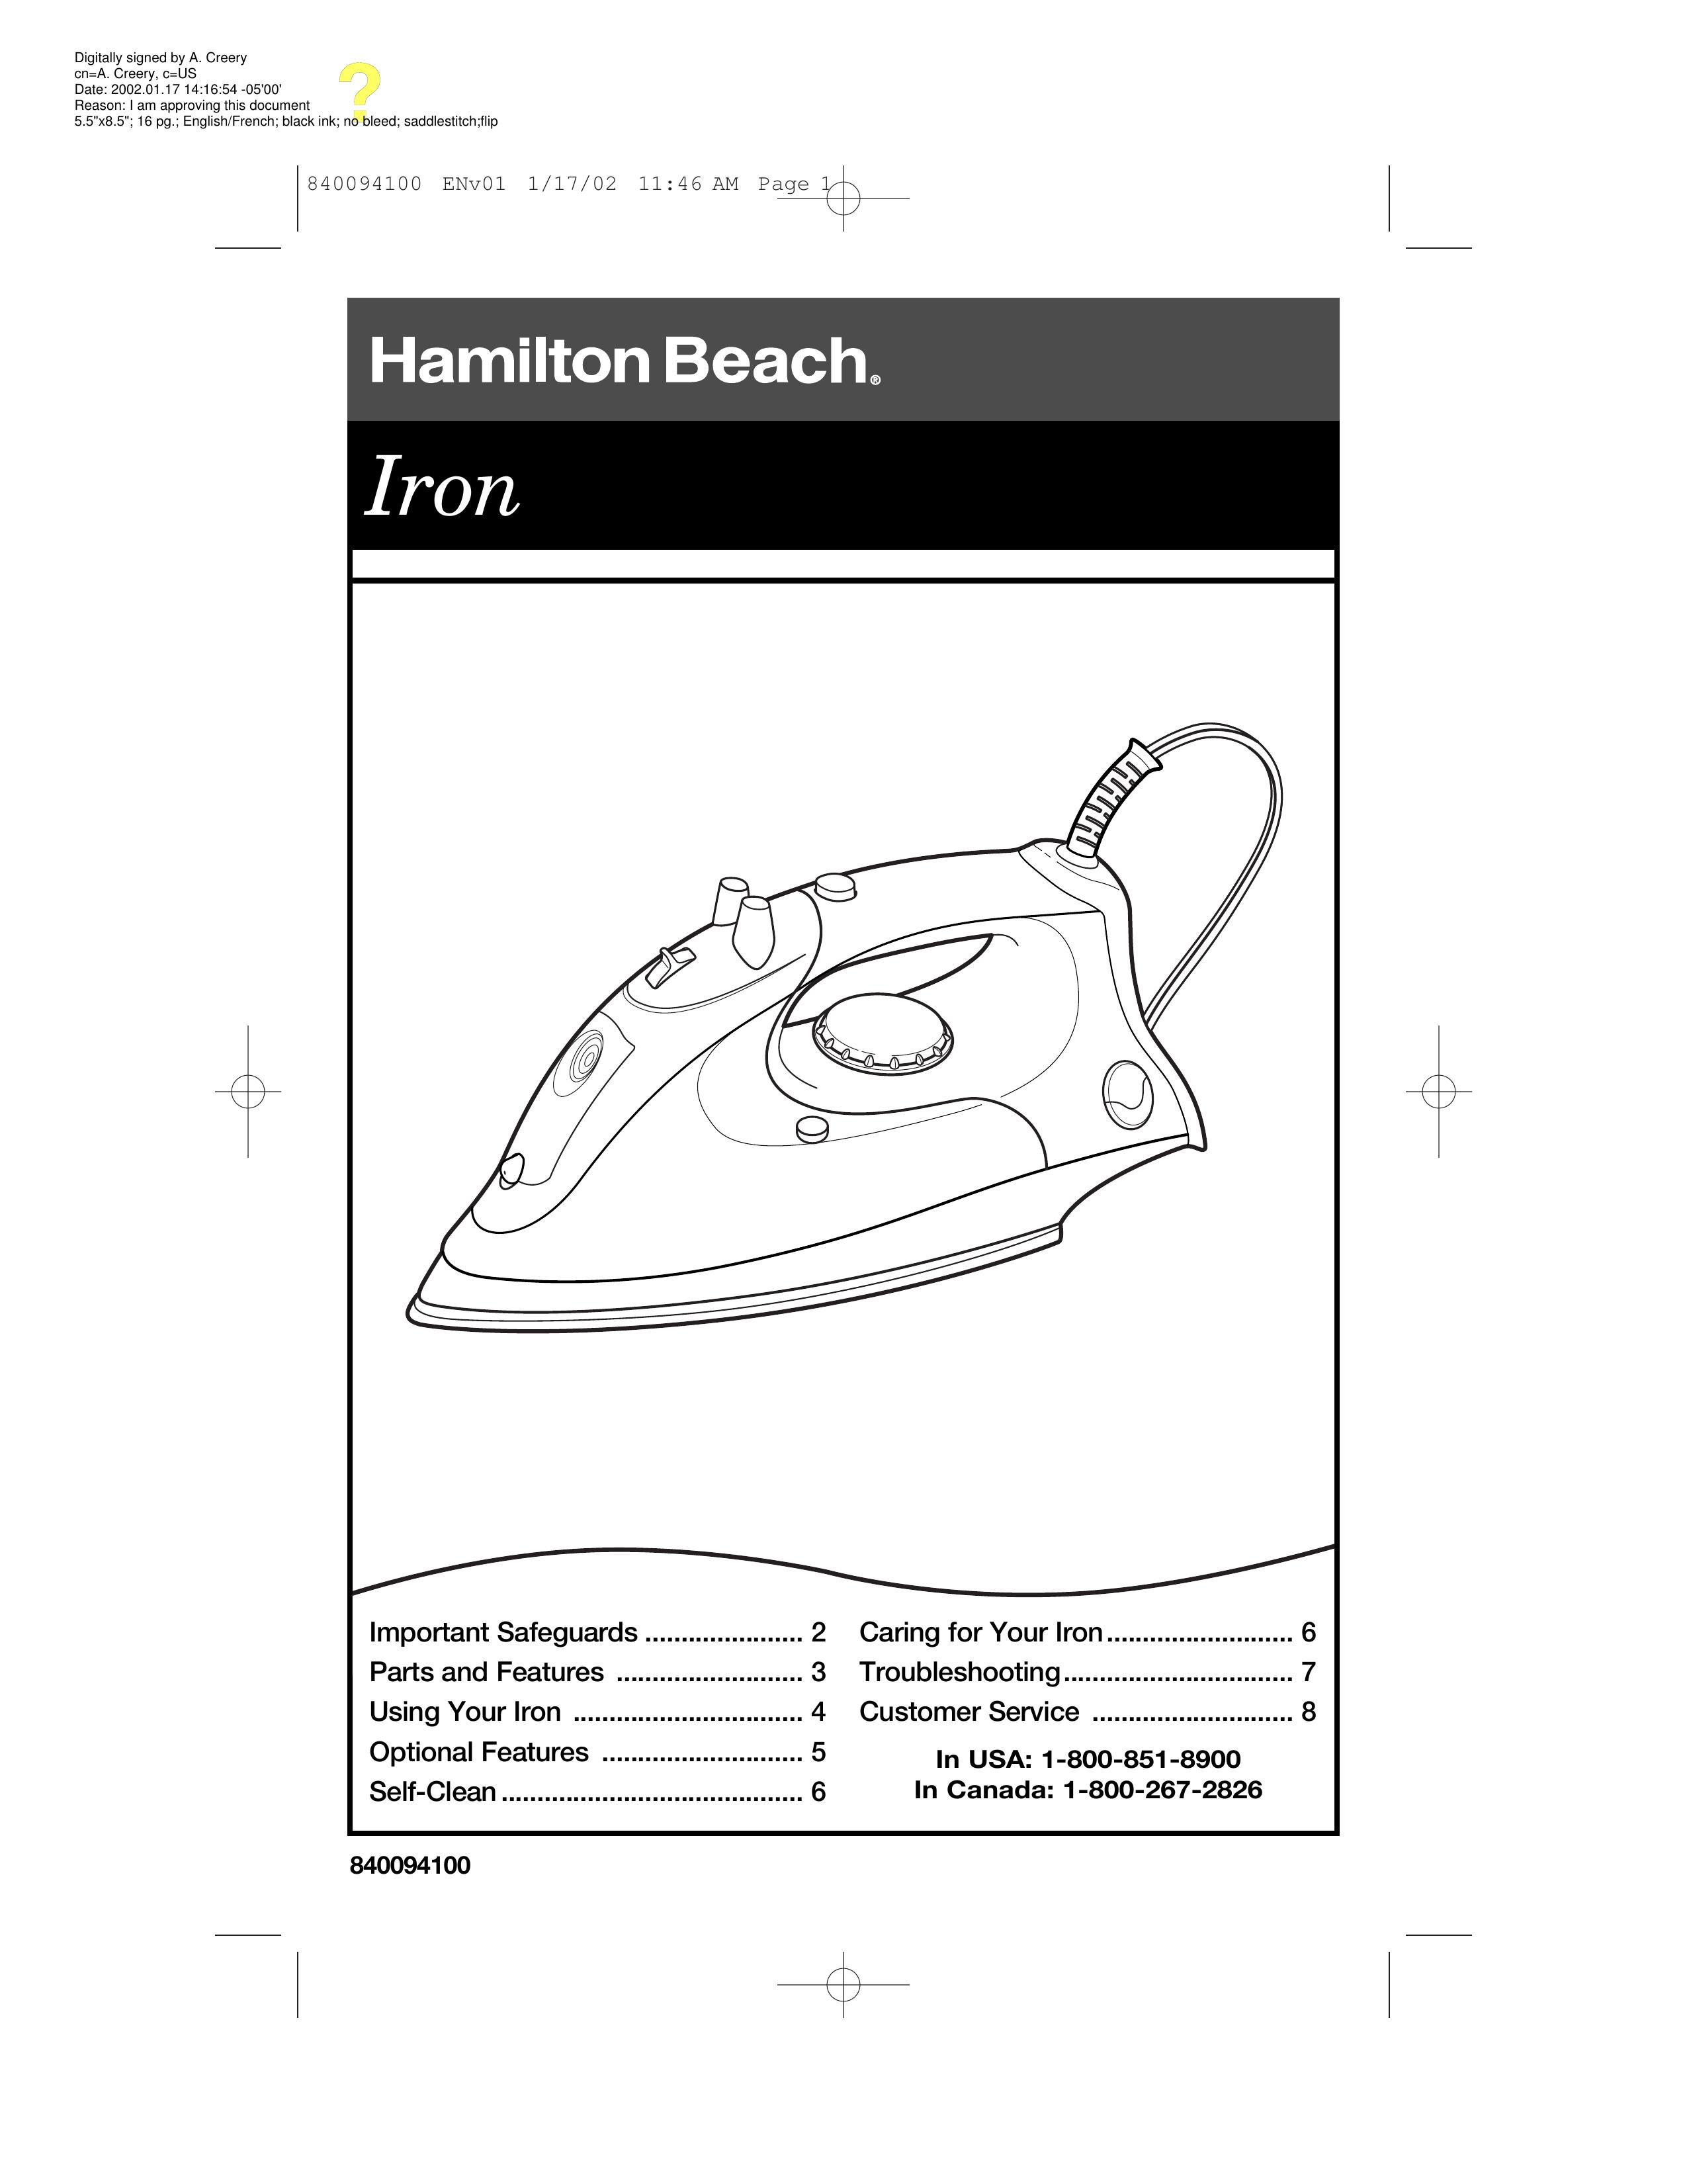 Hamilton Beach 14700 Iron User Manual